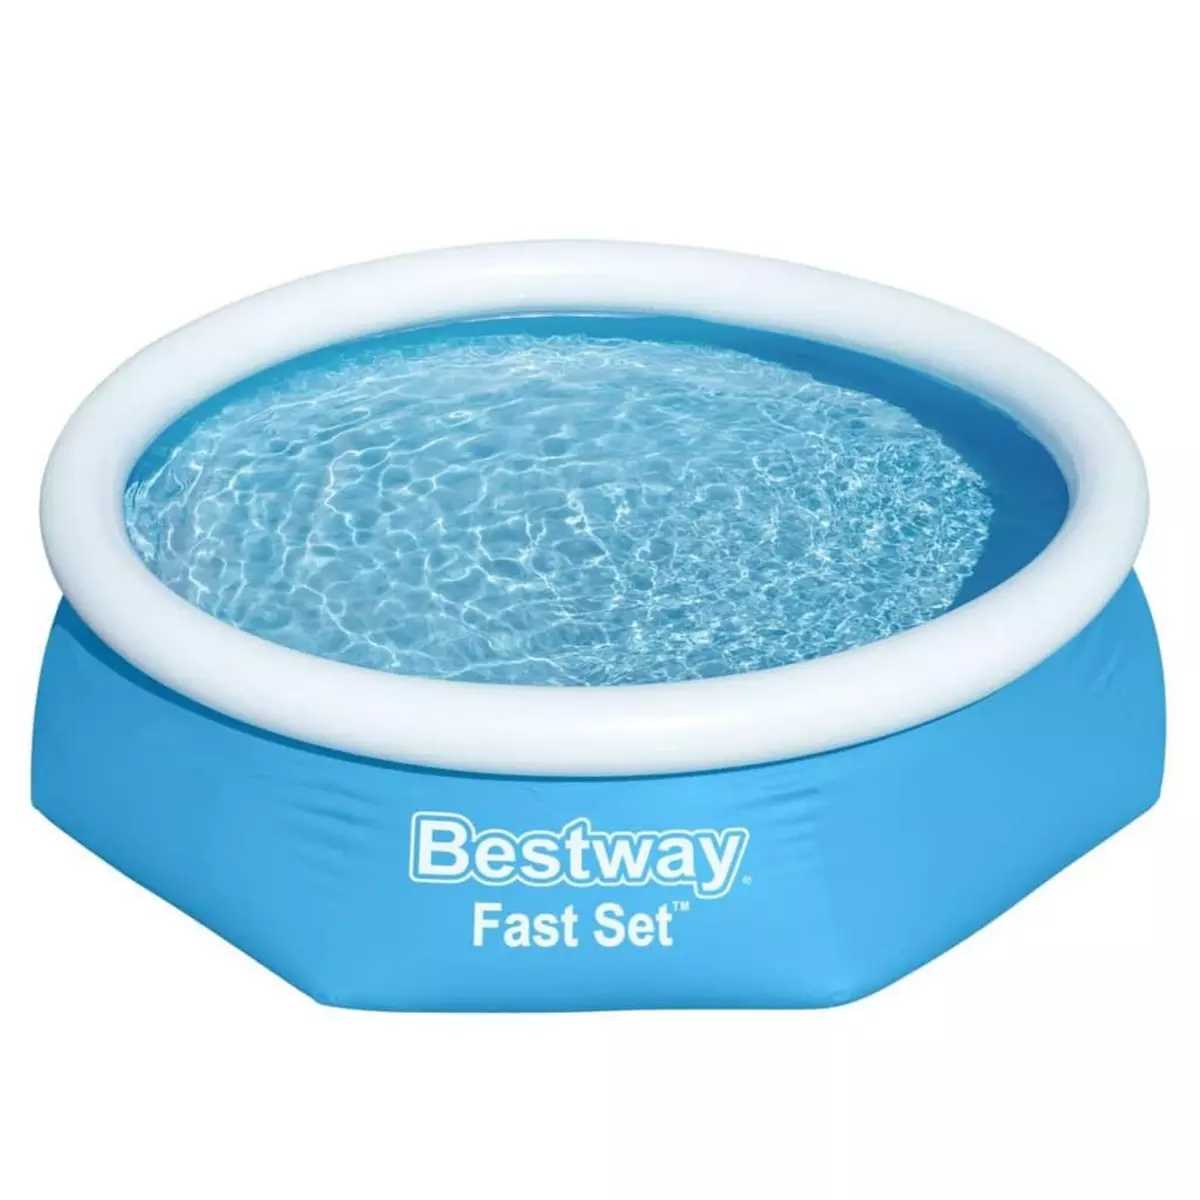 BESTWAY Bestway Piscine ronde Fast Set 244x61 cm Bleu